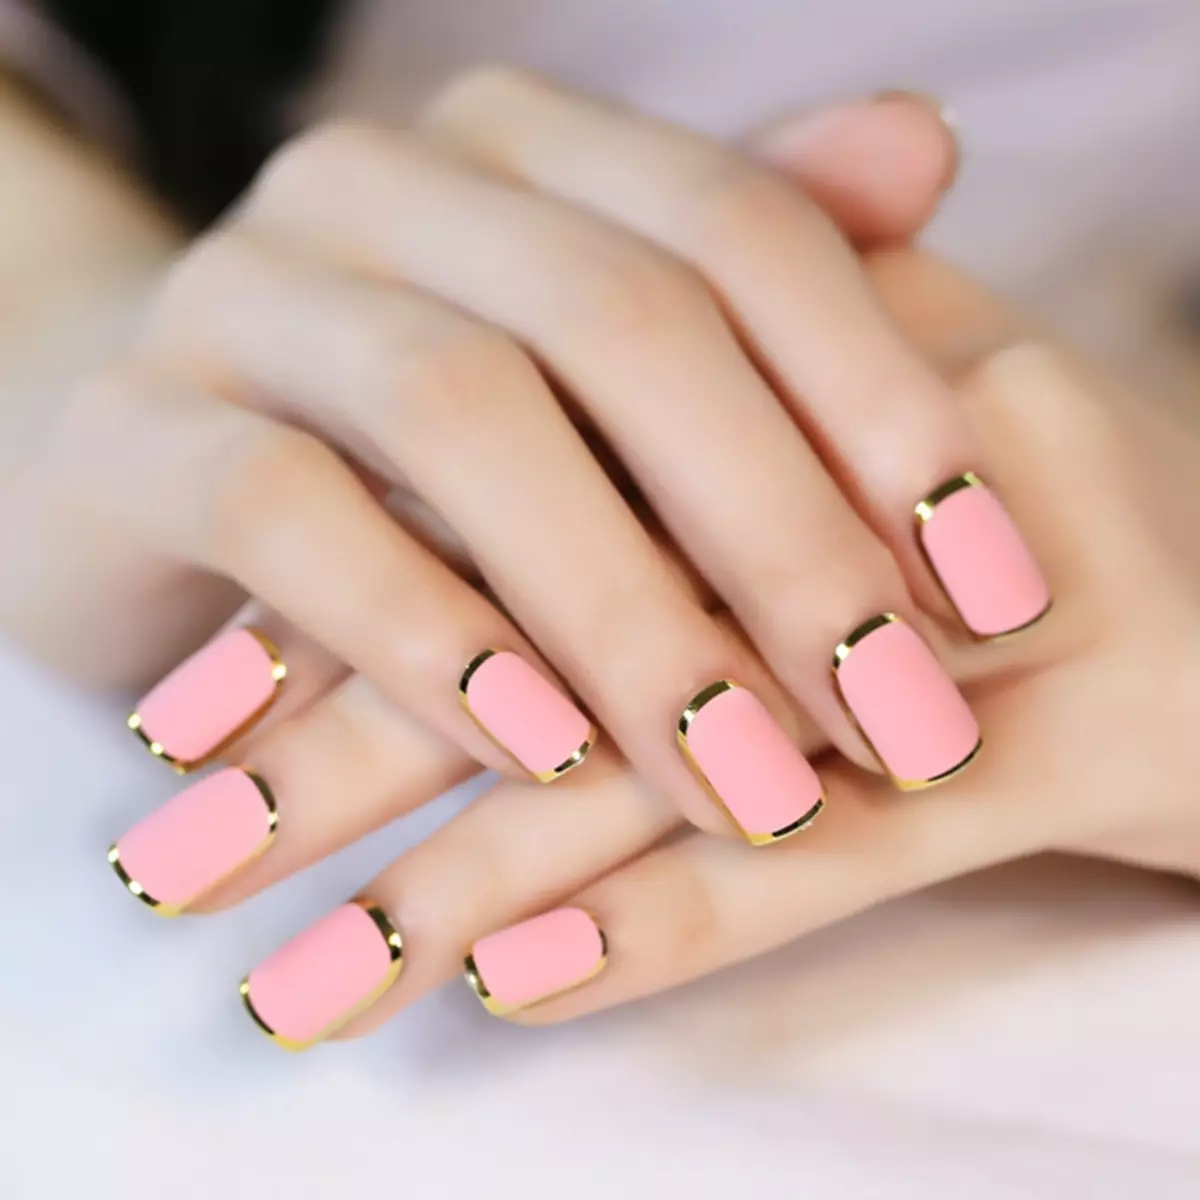 Идея ногтей квадратной формы. Розовые ногти. Р̸о̸з̸о̸в̸ы̸й̸ м̸а̸н̸и̸к̸. Квадратные ногти. Красивый розовый маникюр.